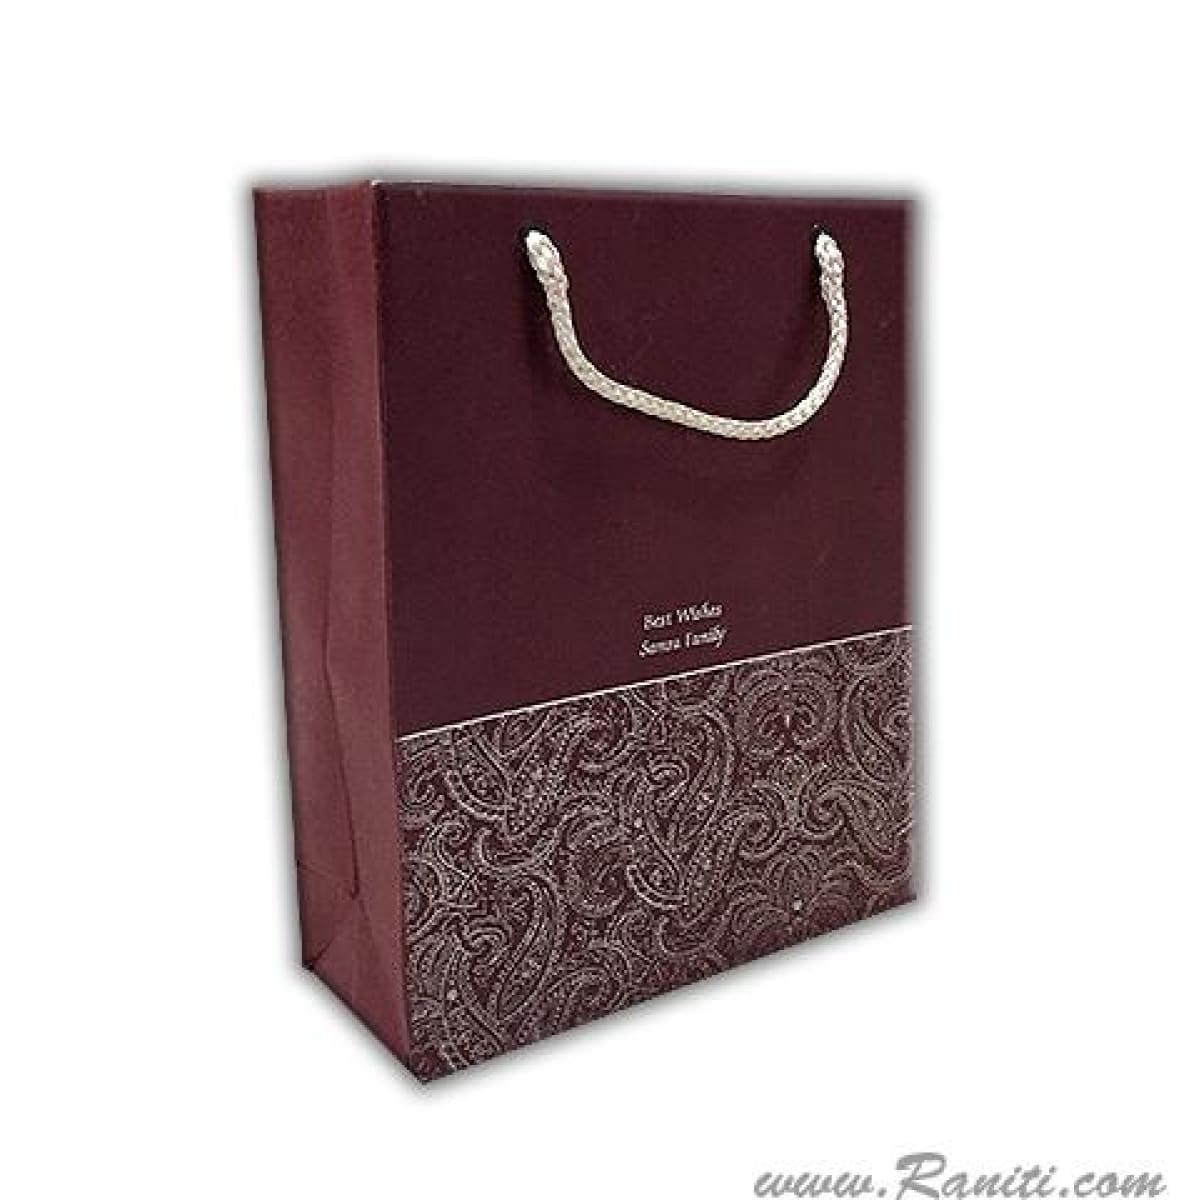 Custom Personalized Paper Bag - Paisley Theme Custom Wedding Guest